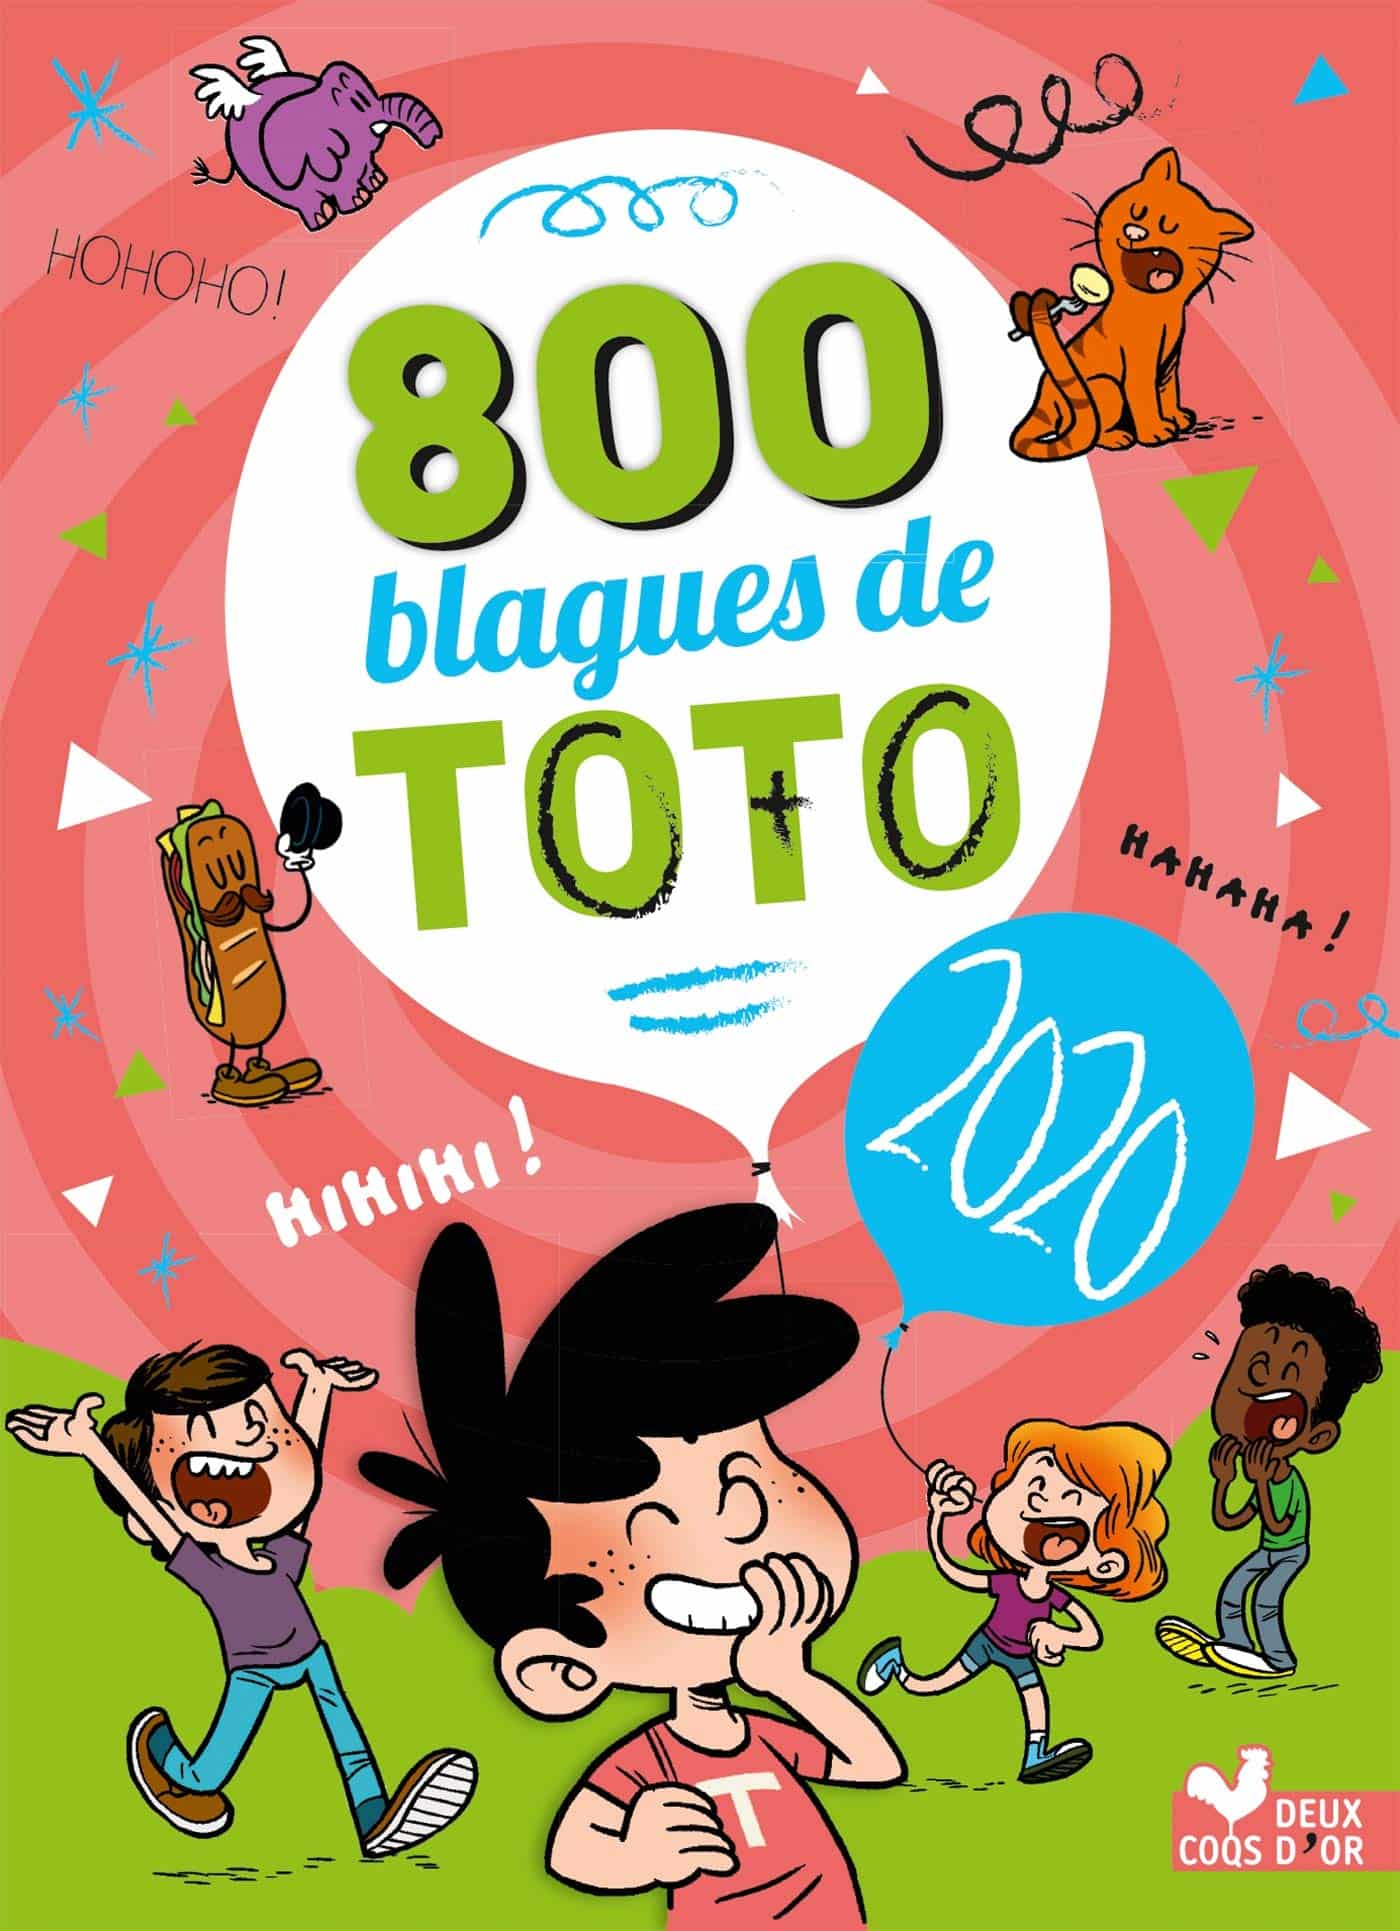 800 blagues de Toto 2020